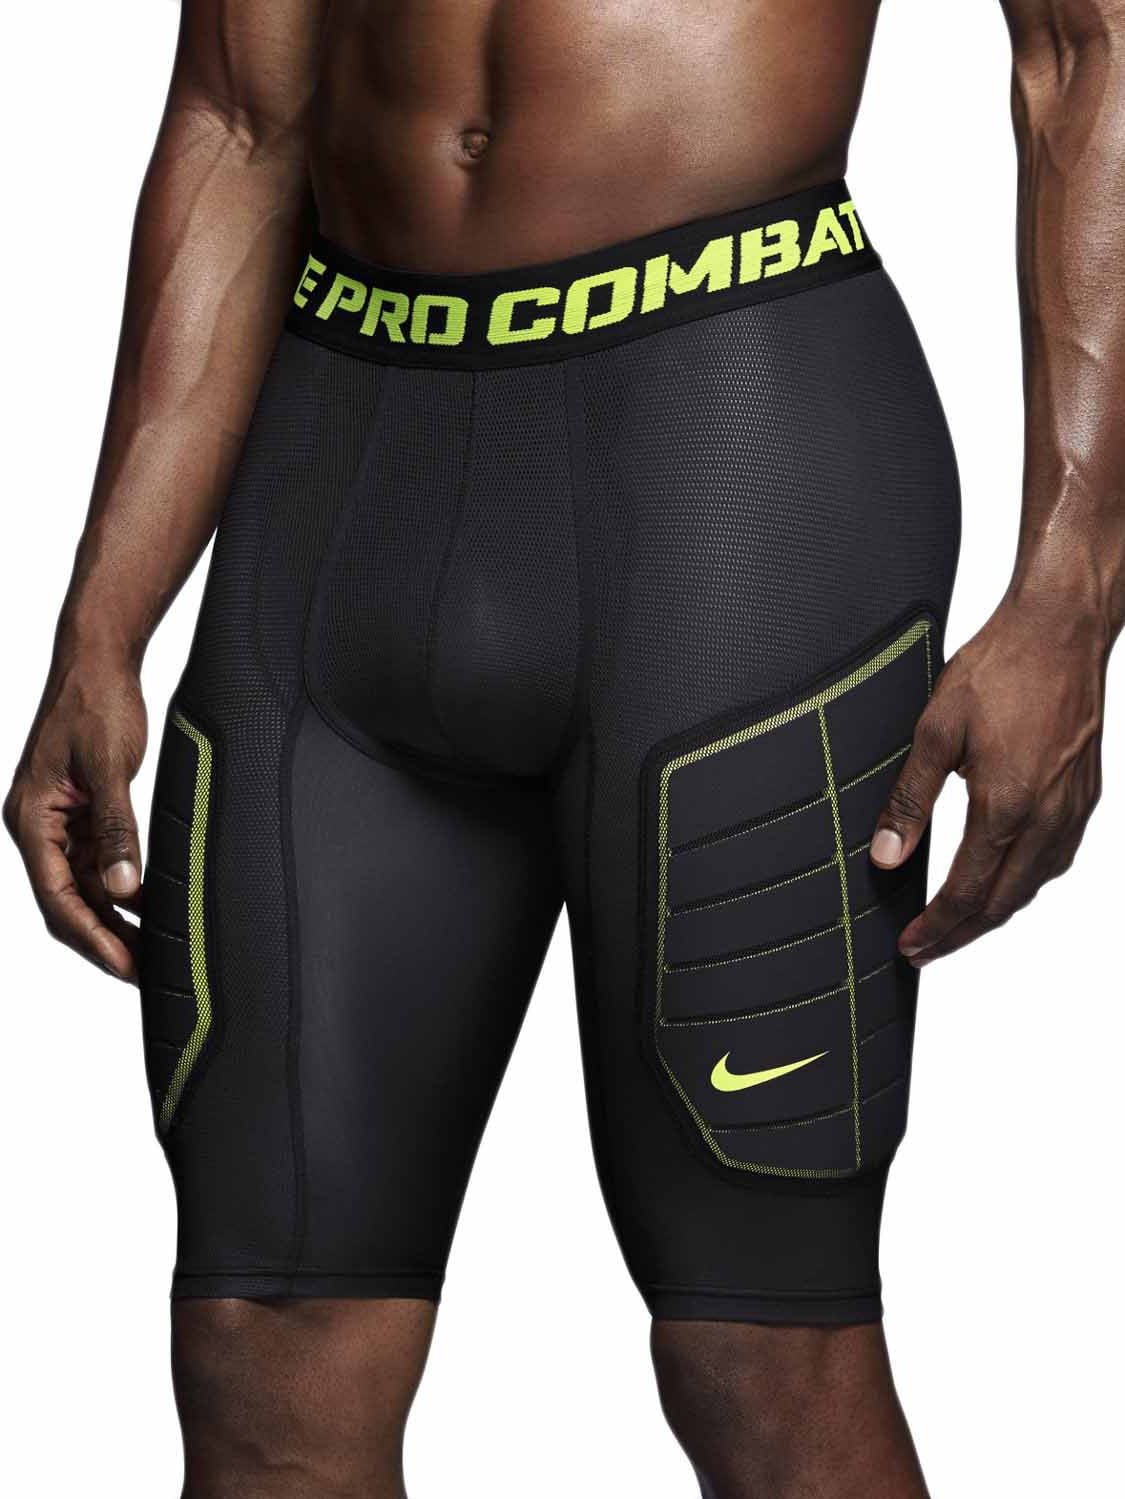 Nike Pro Combat Padded Compression Shorts Men's Black Used 3XL